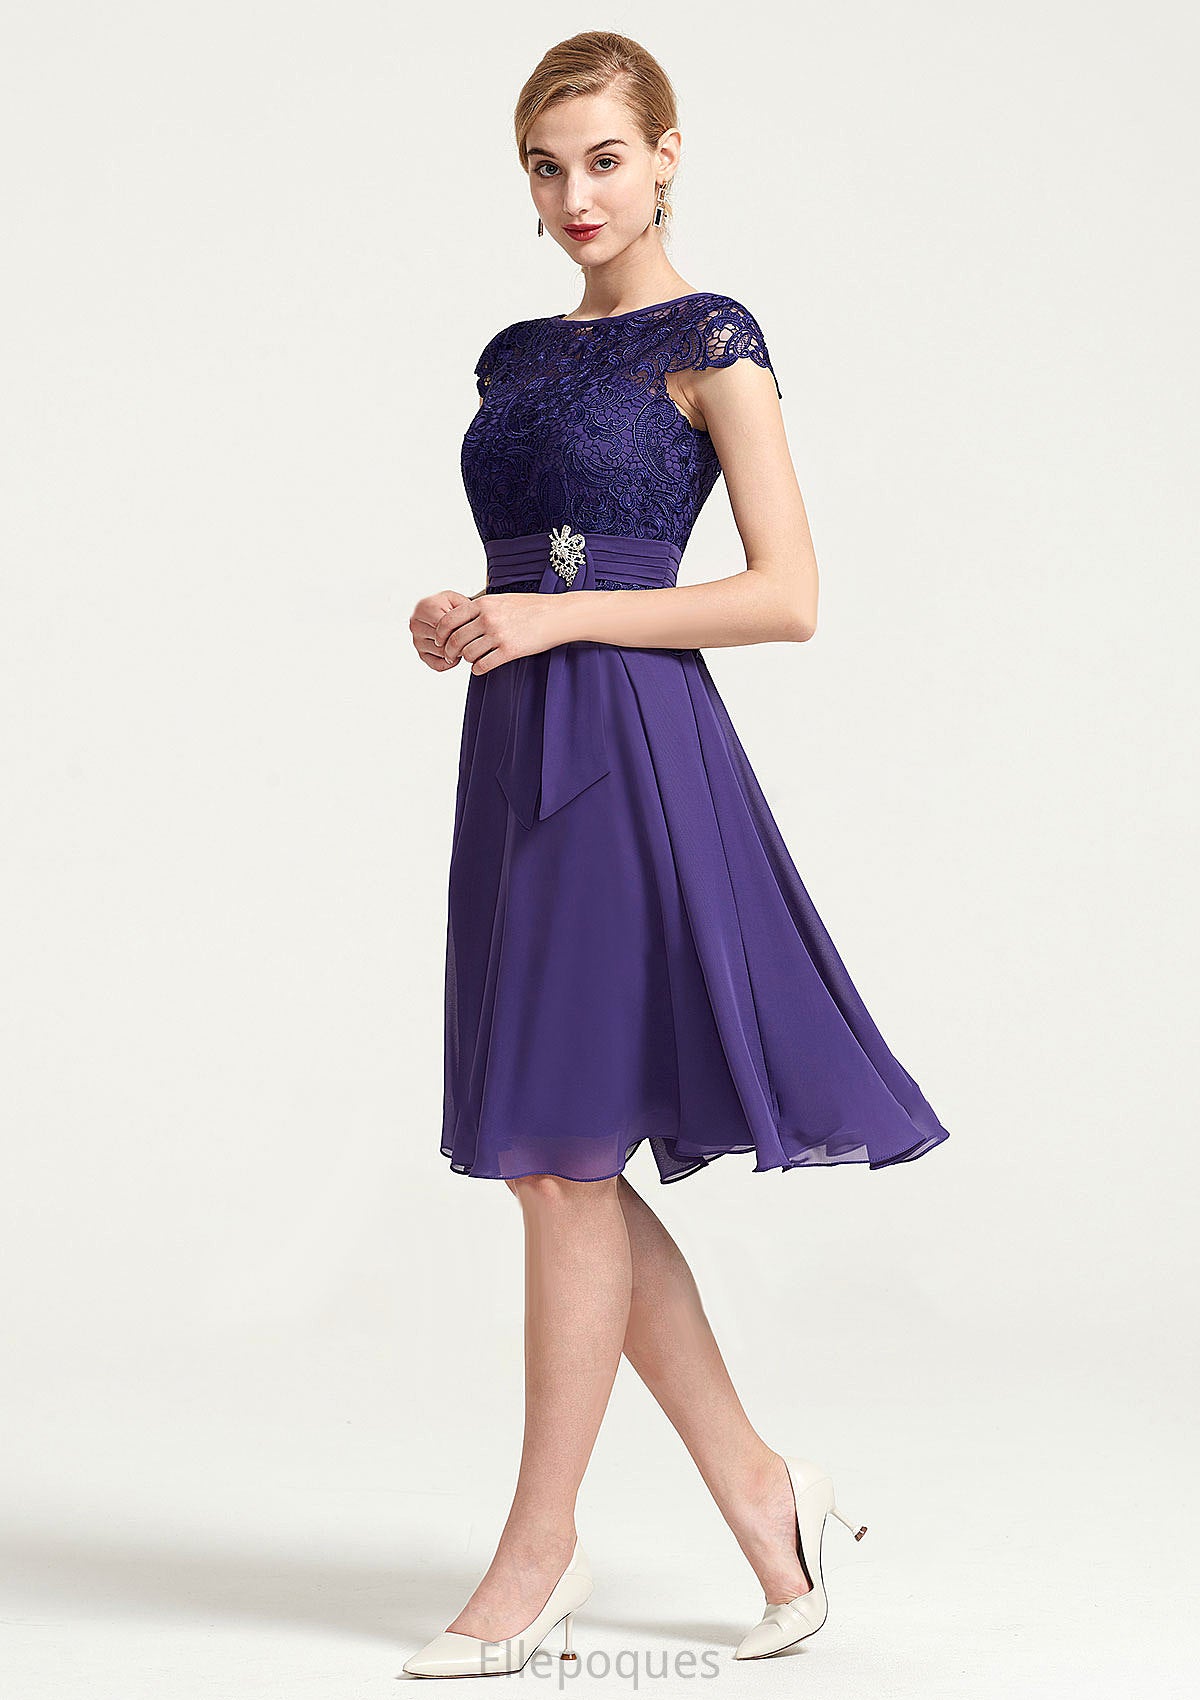 Sleeveless Bateau Knee-Length A-line/Princess Chiffon Bridesmaid Dresses With Rhinestone Appliqued Sashes Haley HOP0025496